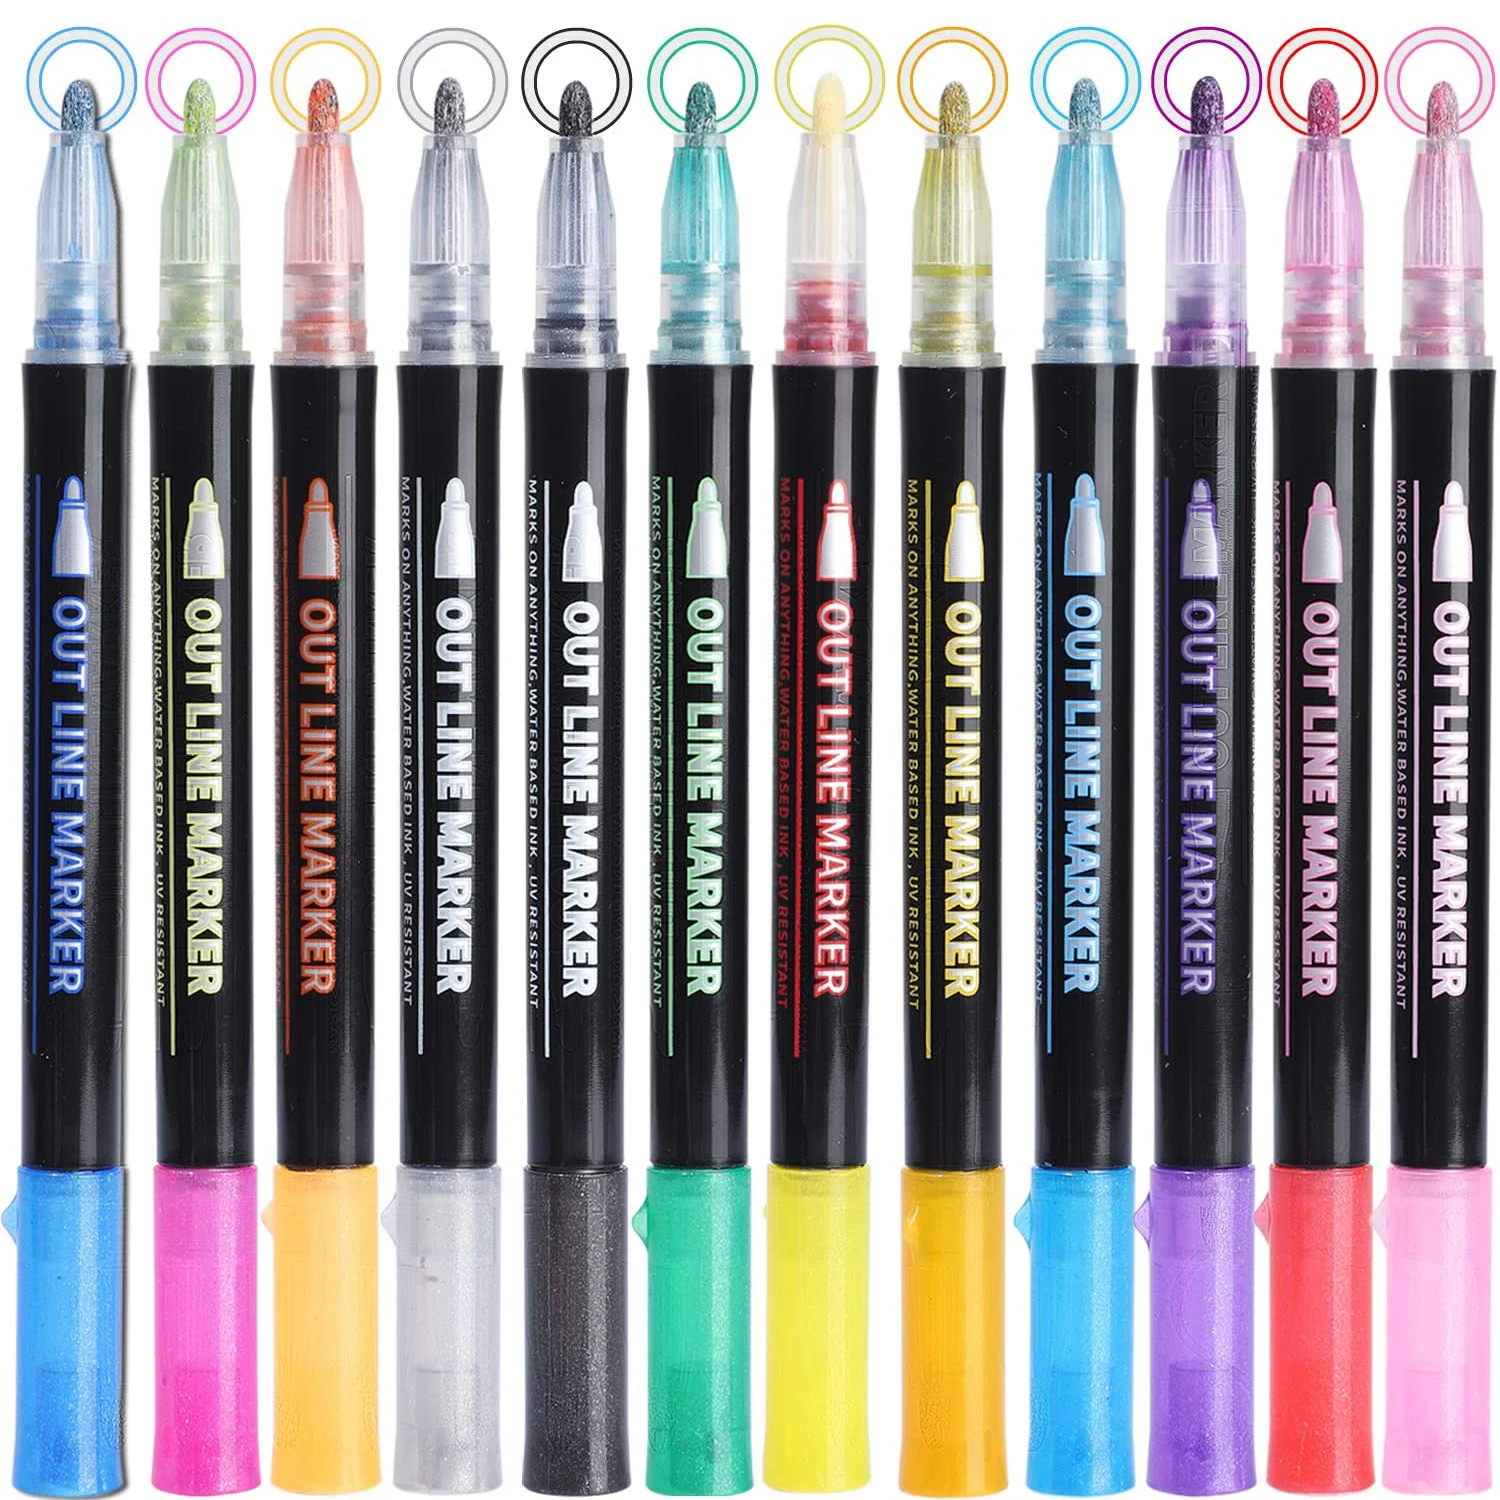 https://ae01.alicdn.com/kf/S746f23f647dd4fd1b2541b5e46285e120/12-24-Colors-Outline-Metallic-Markers-Pens-Double-Line-Pen-Magic-Glitter-Drawing-Pen-for-Greeting.jpg